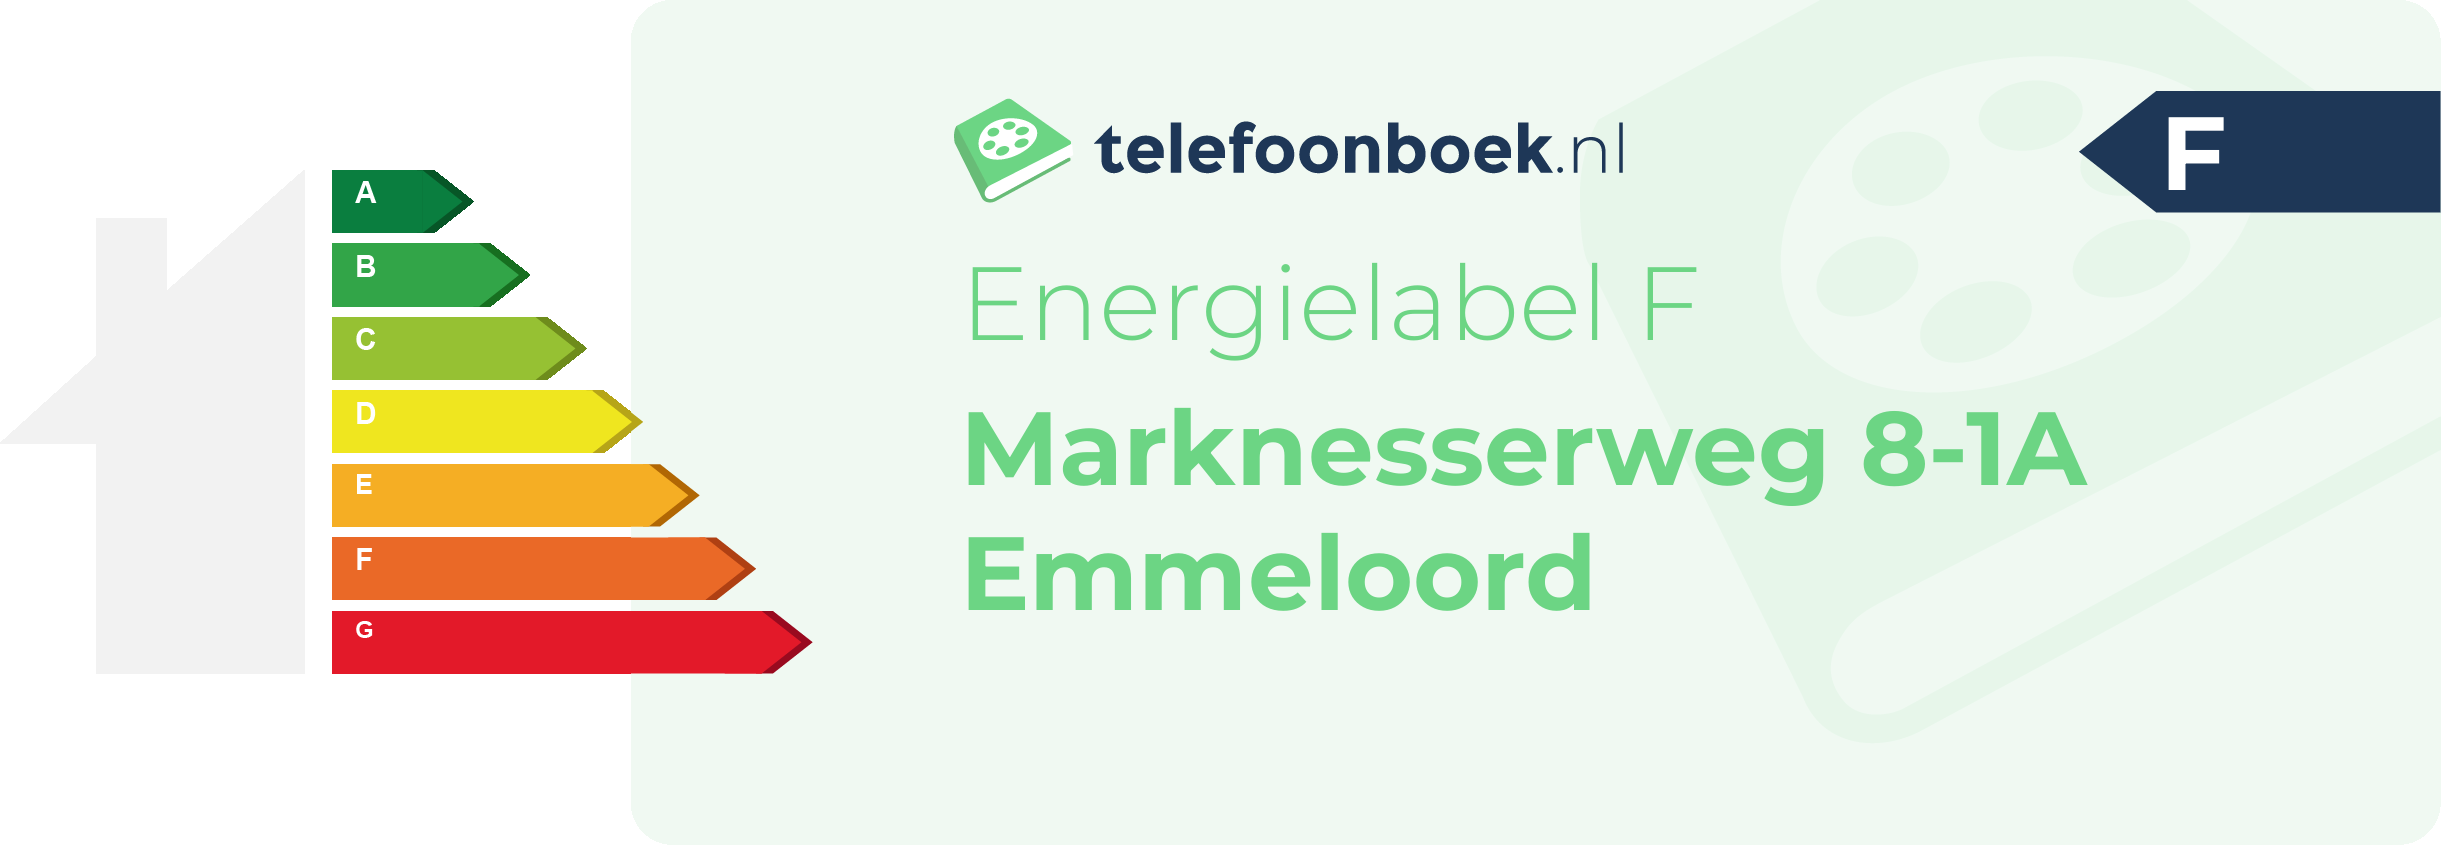 Energielabel Marknesserweg 8-1A Emmeloord